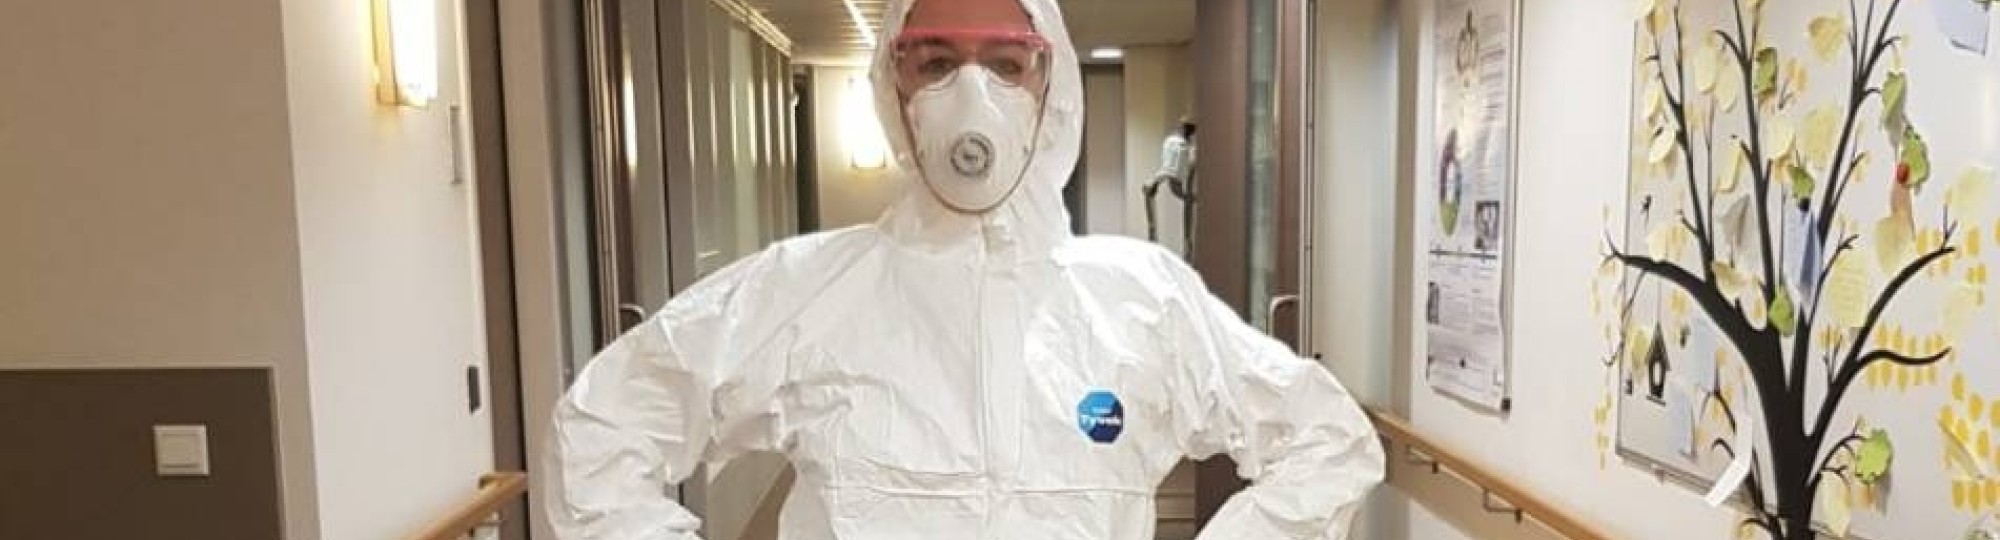 177540 student Verpleegkunde deeltijd Ashley Venrooij in beschermende kleding corona 2020